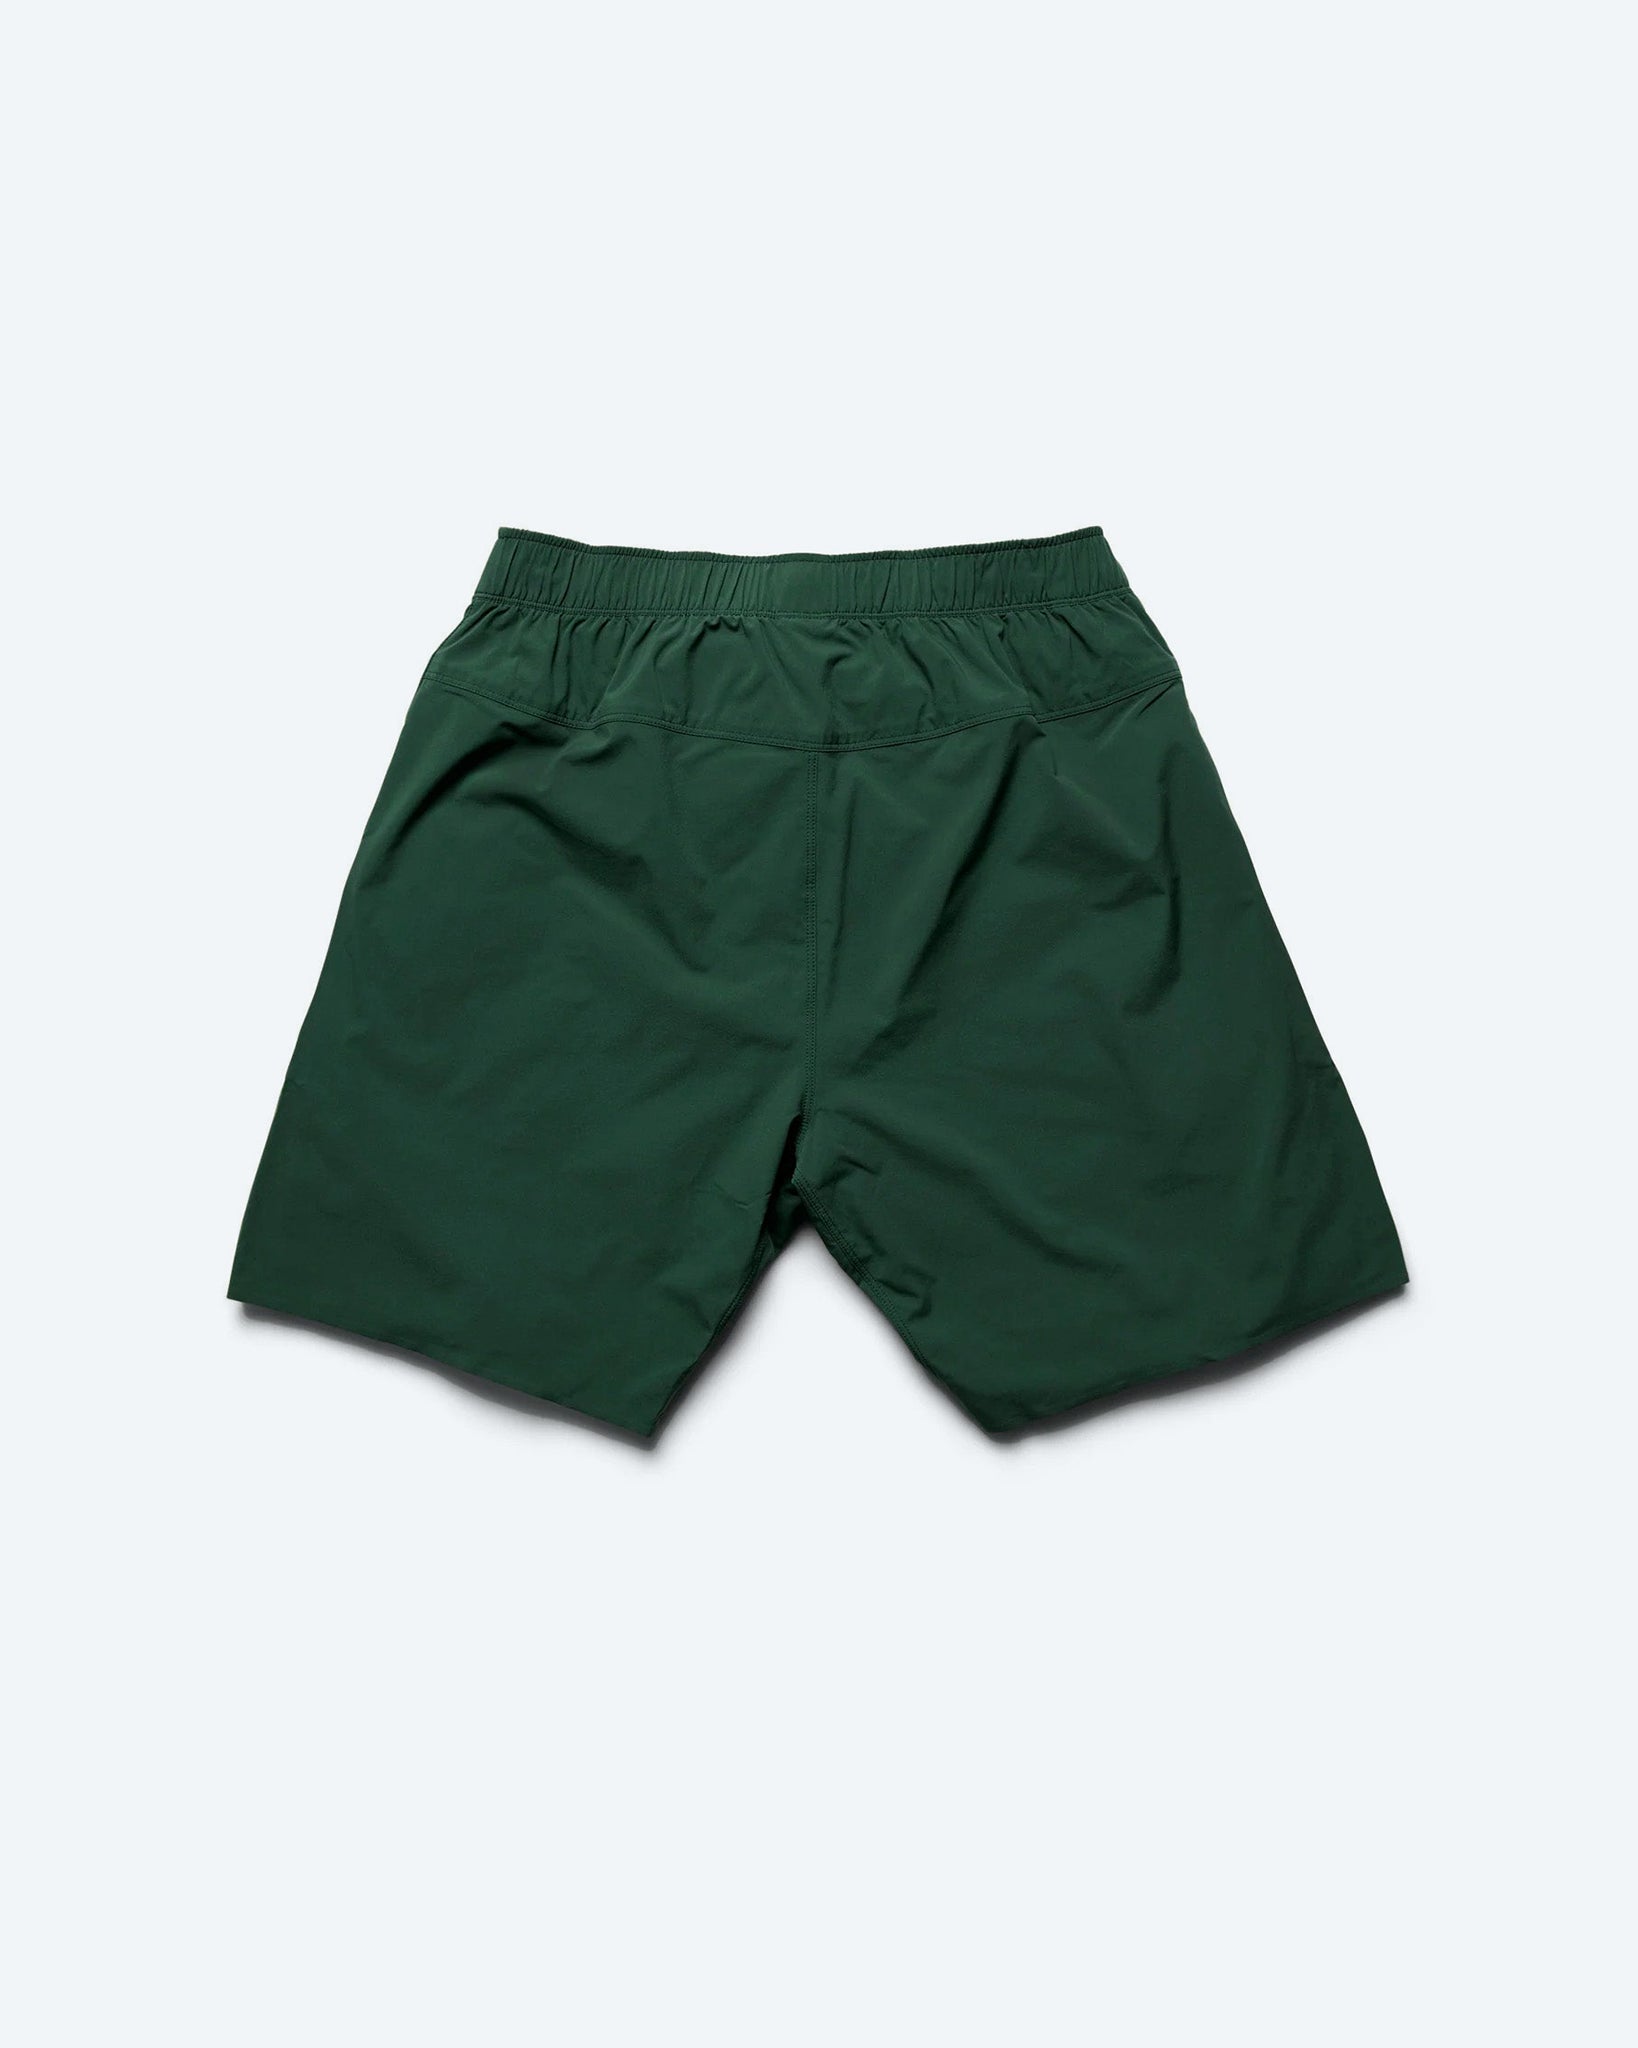 Shop Men's Shorts, Chino, Gym, Active & Swimwear